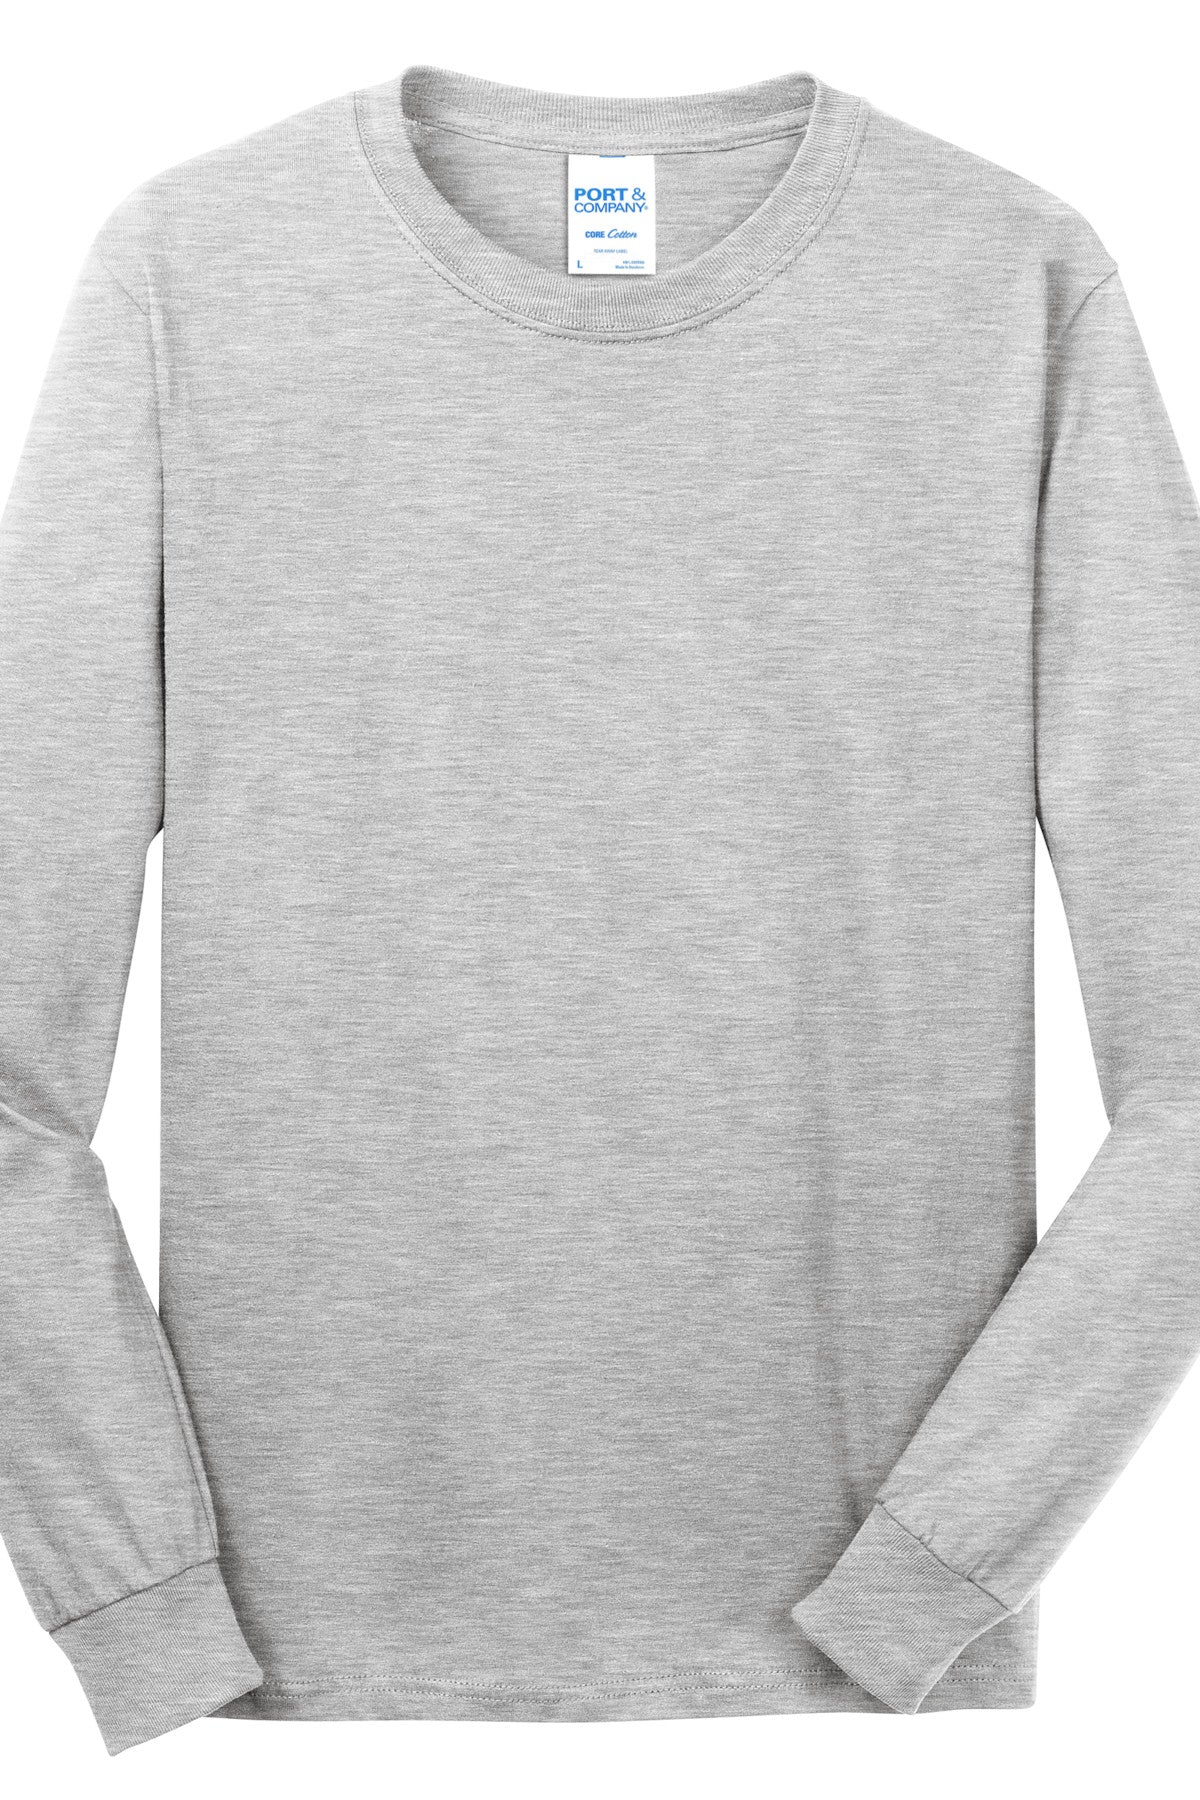 Port & Company® Pc54Ls Long Sleeve Cotton T-Shirt Ad Small / Ash